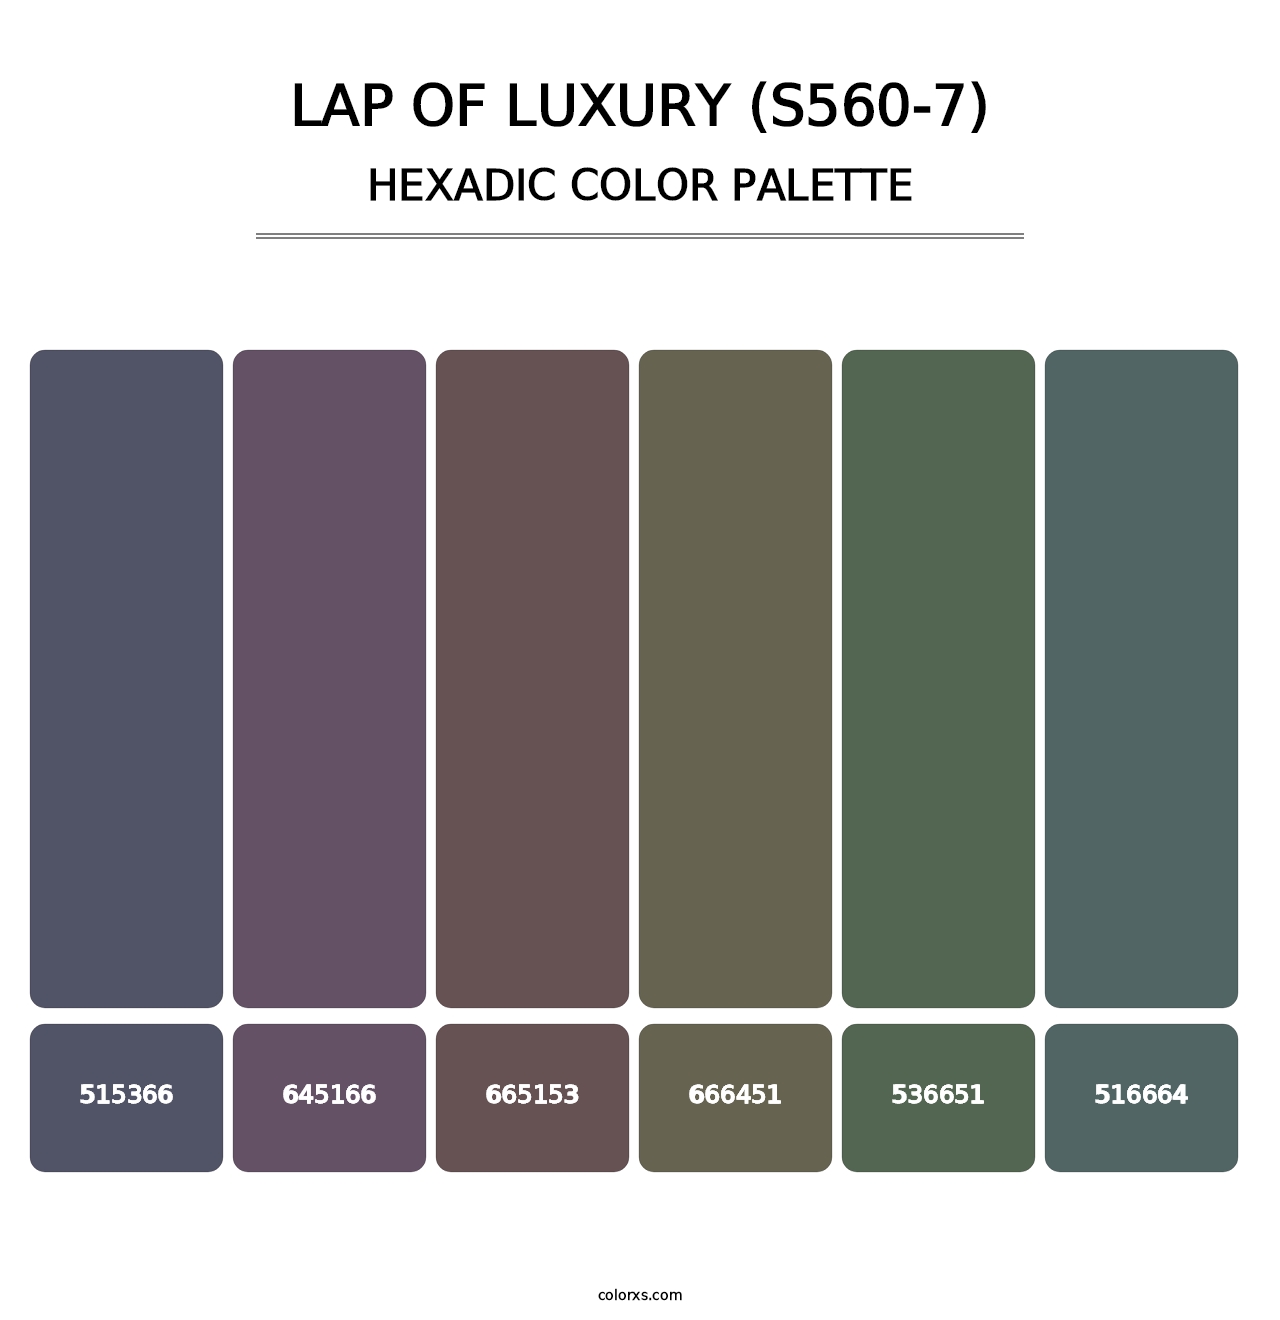 Lap Of Luxury (S560-7) - Hexadic Color Palette